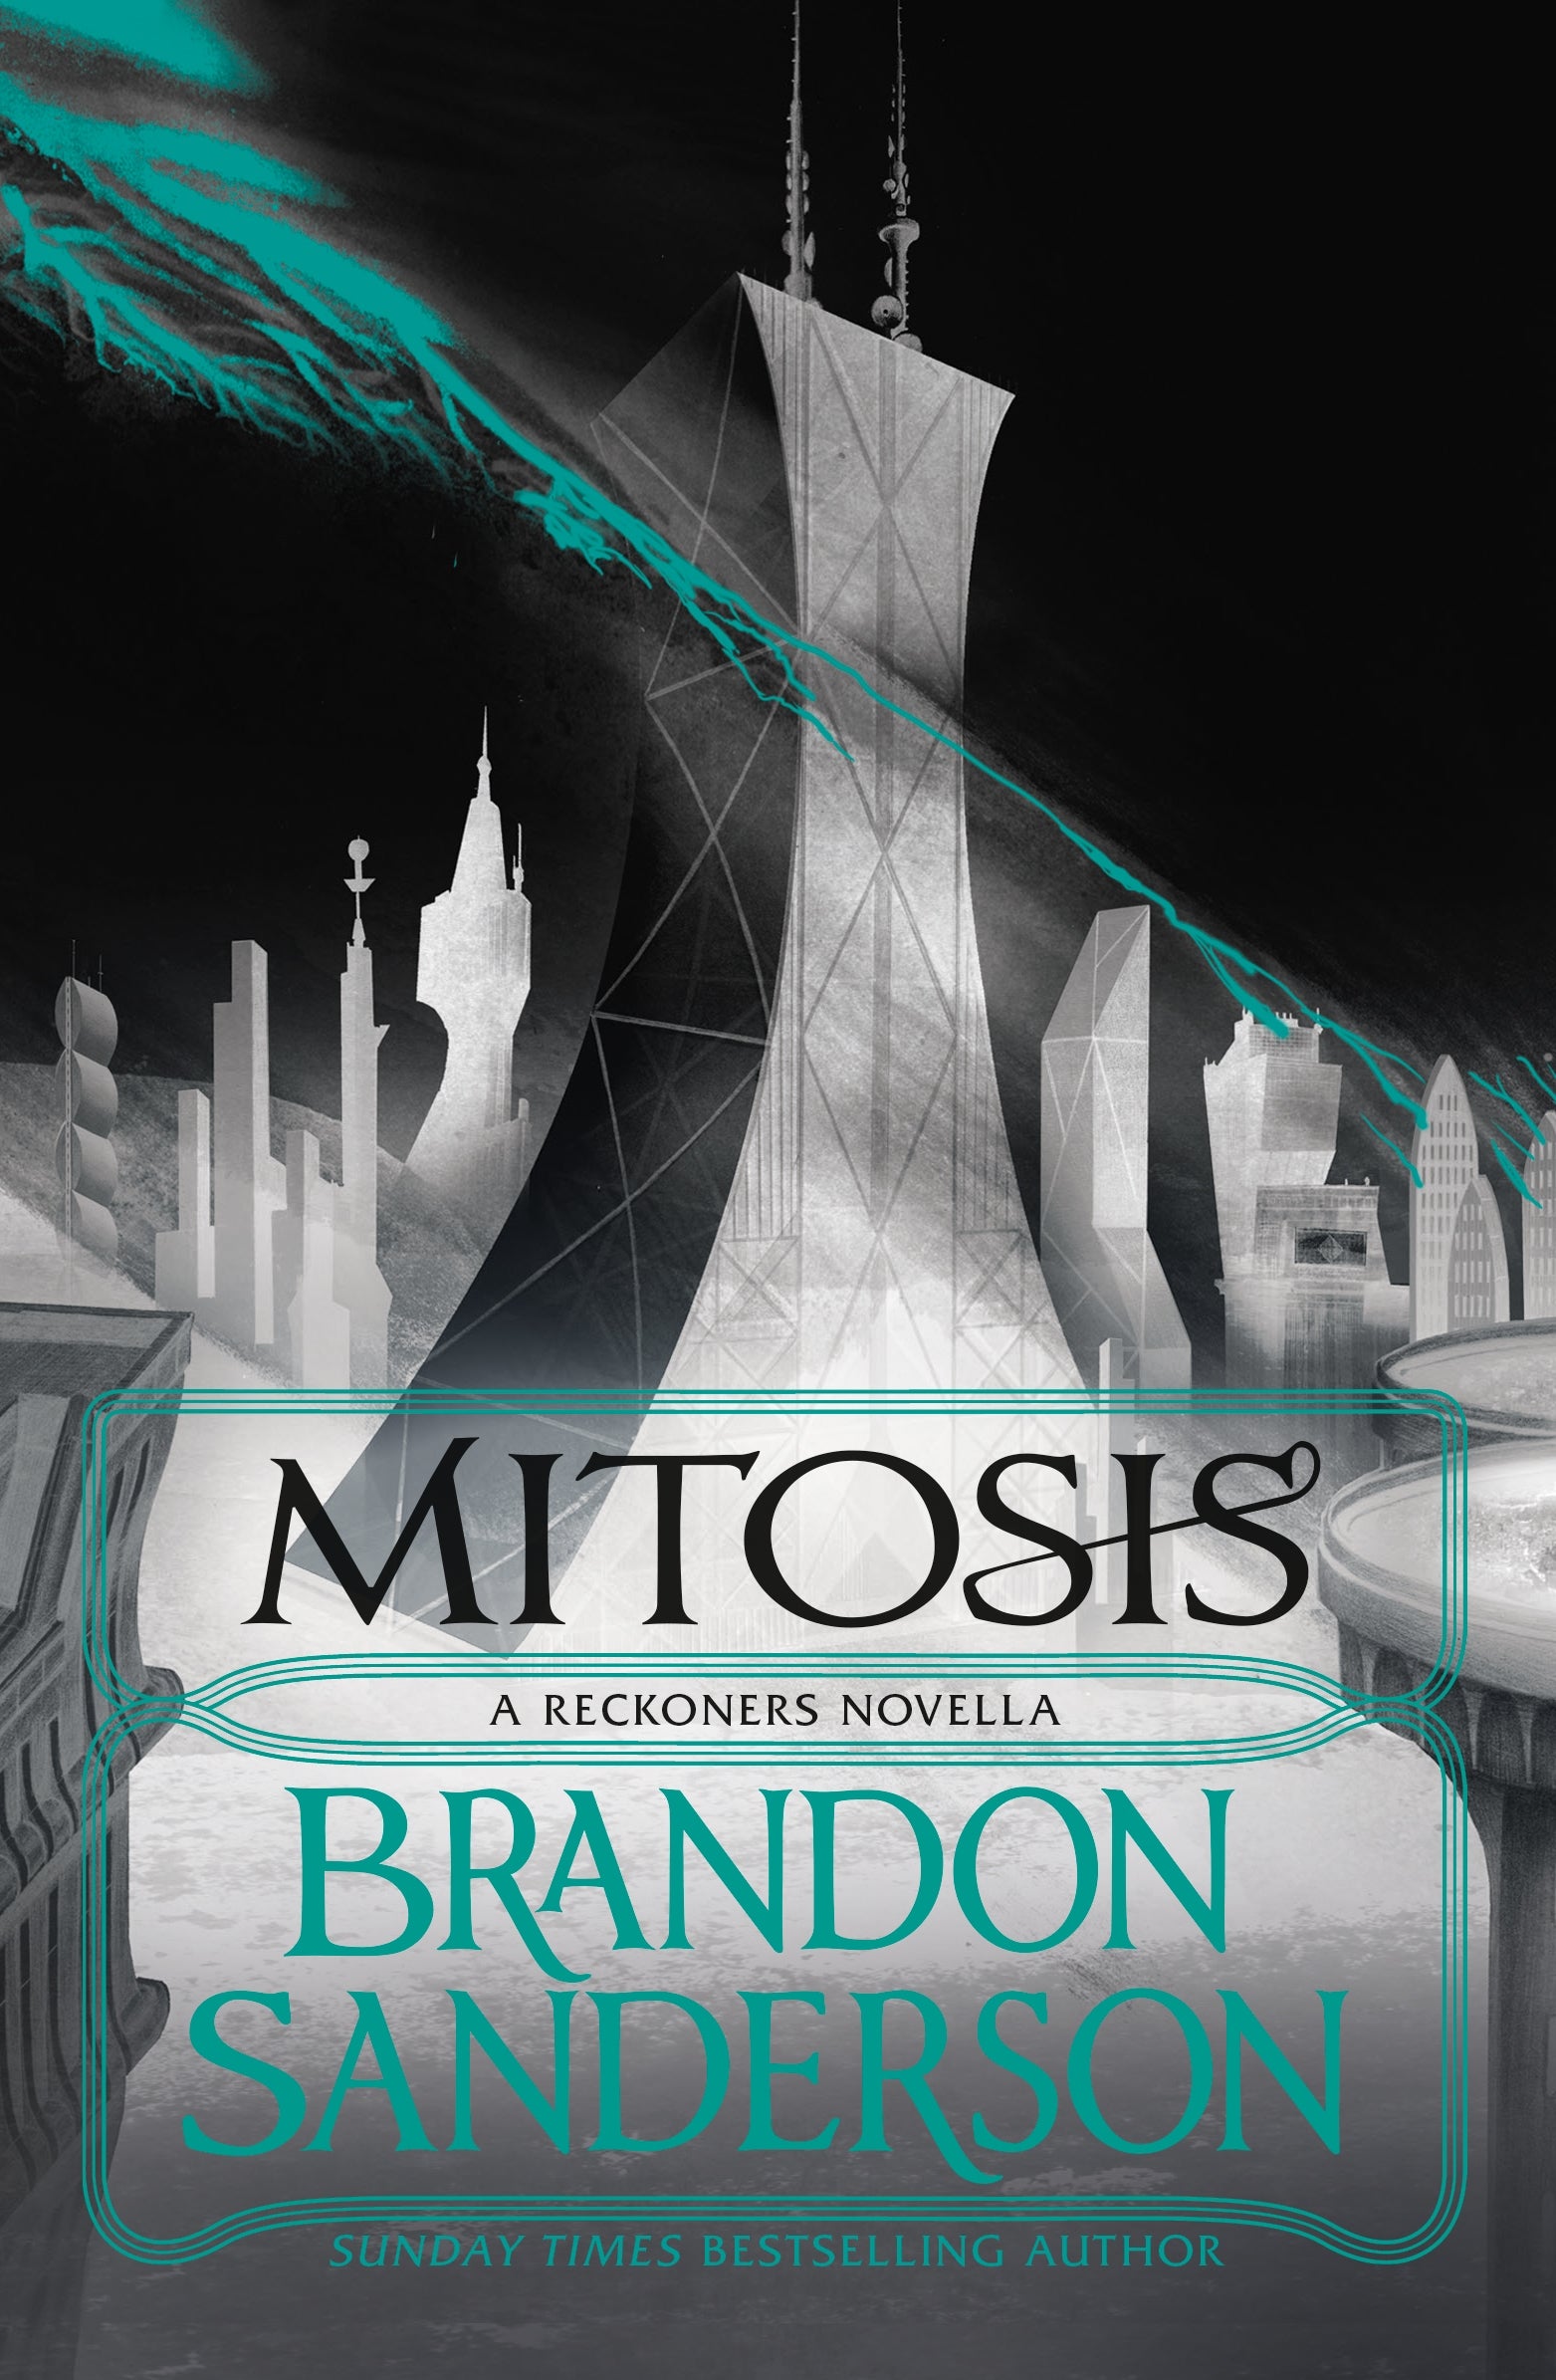 Mitosis by Brandon Sanderson